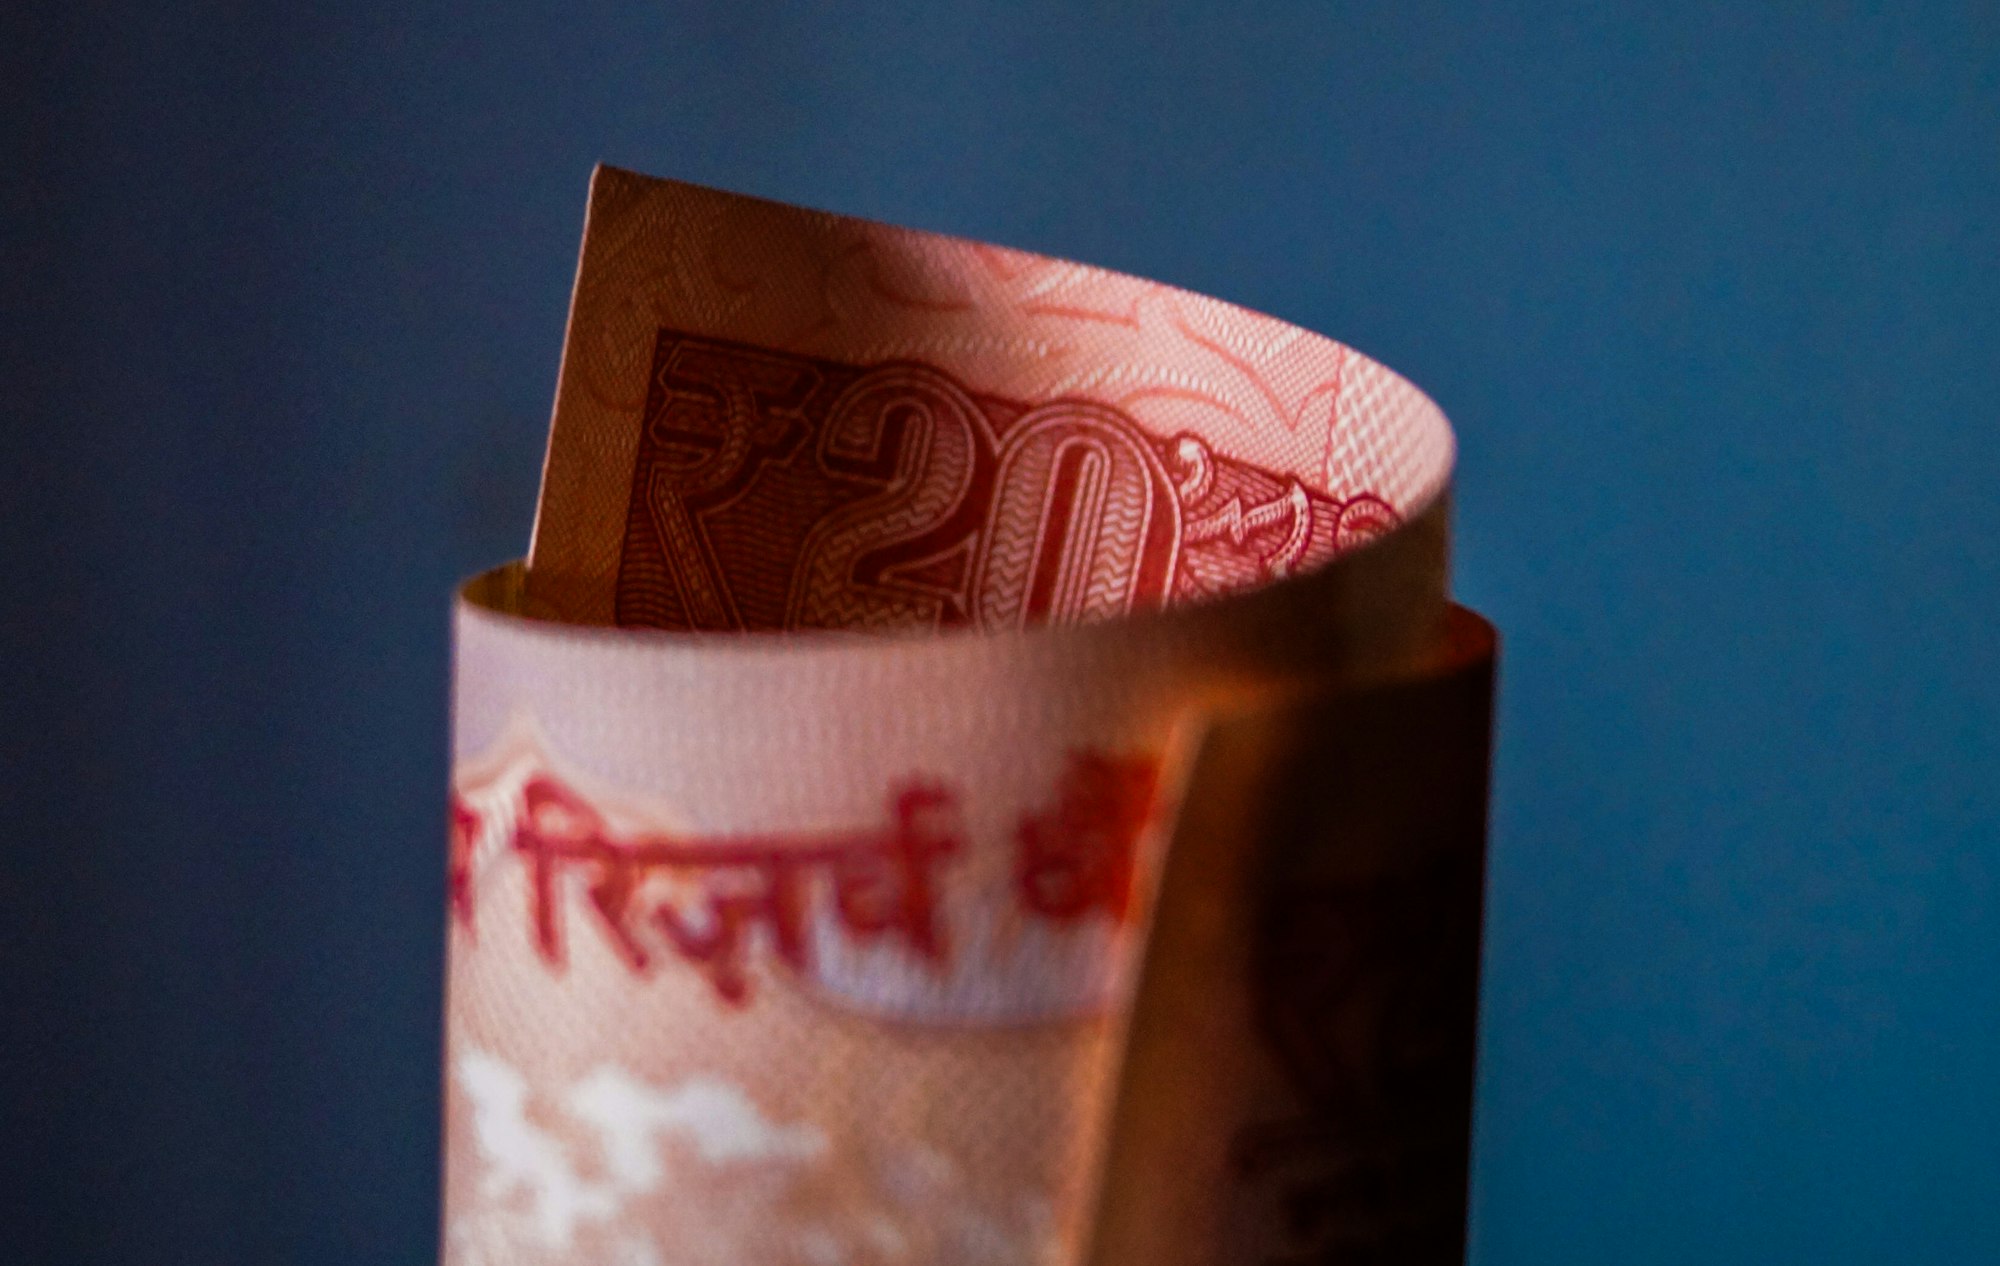 Indian market lending startup Vivriti Capital raises $30 million